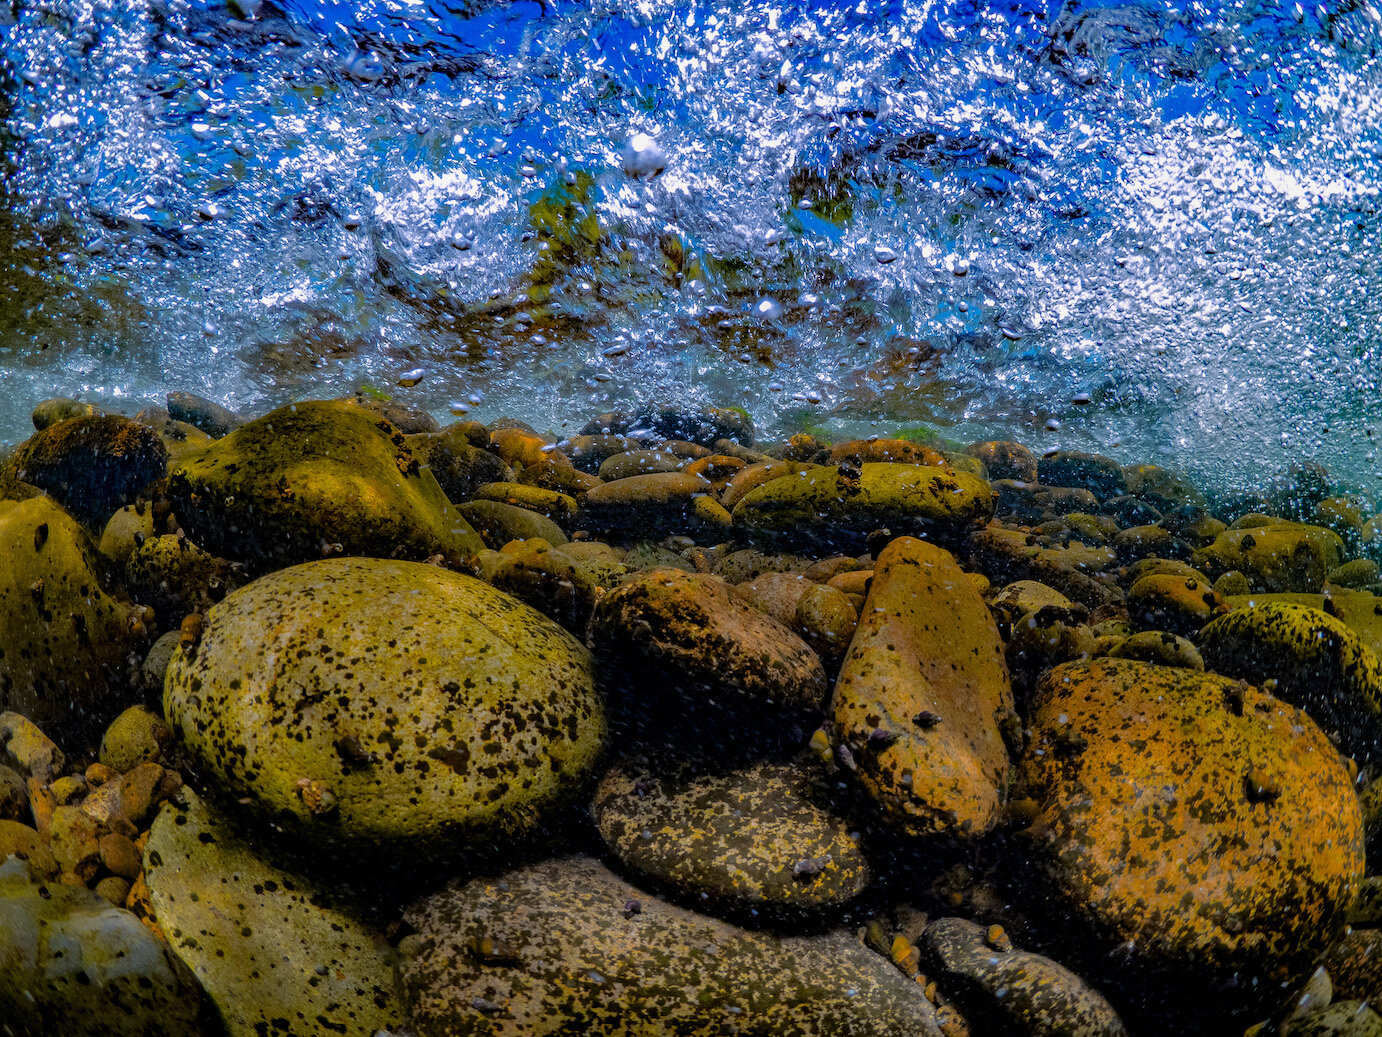 Oregon Freshwater Willamette River by Laura Tesler